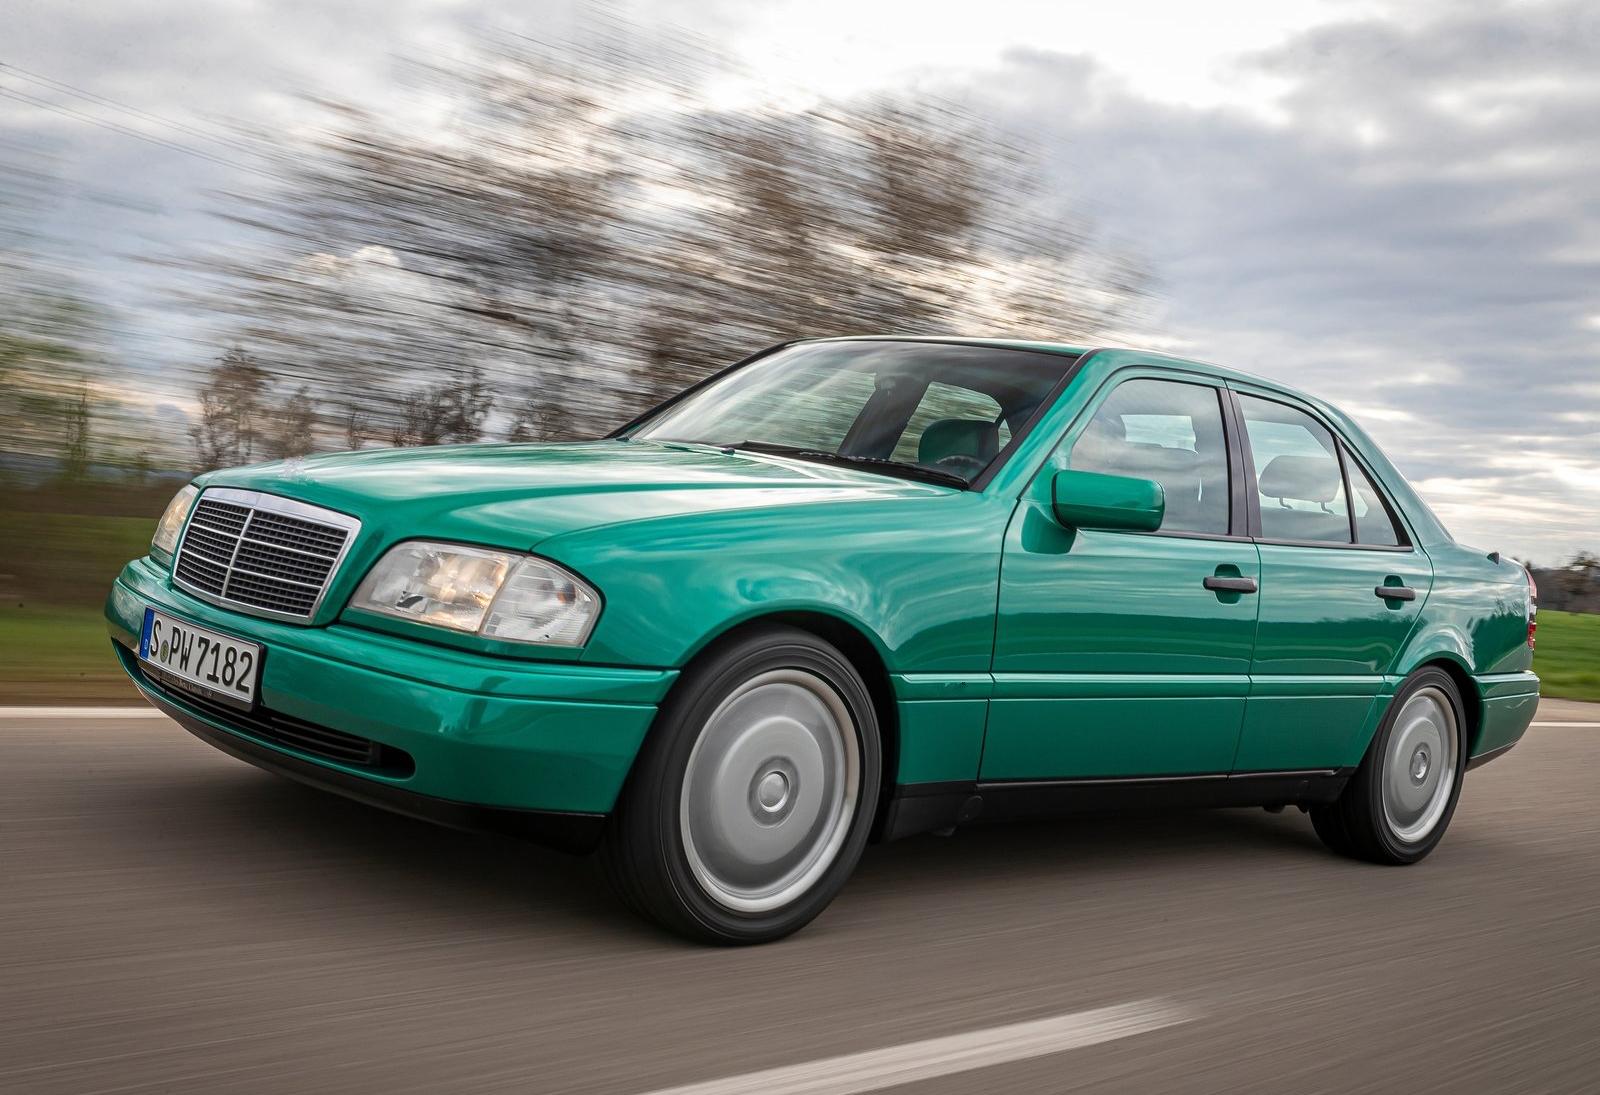 Zlatá doba automobilizmu: Spoznáte v kvíze všetky známe modely áut z 90. rokov?